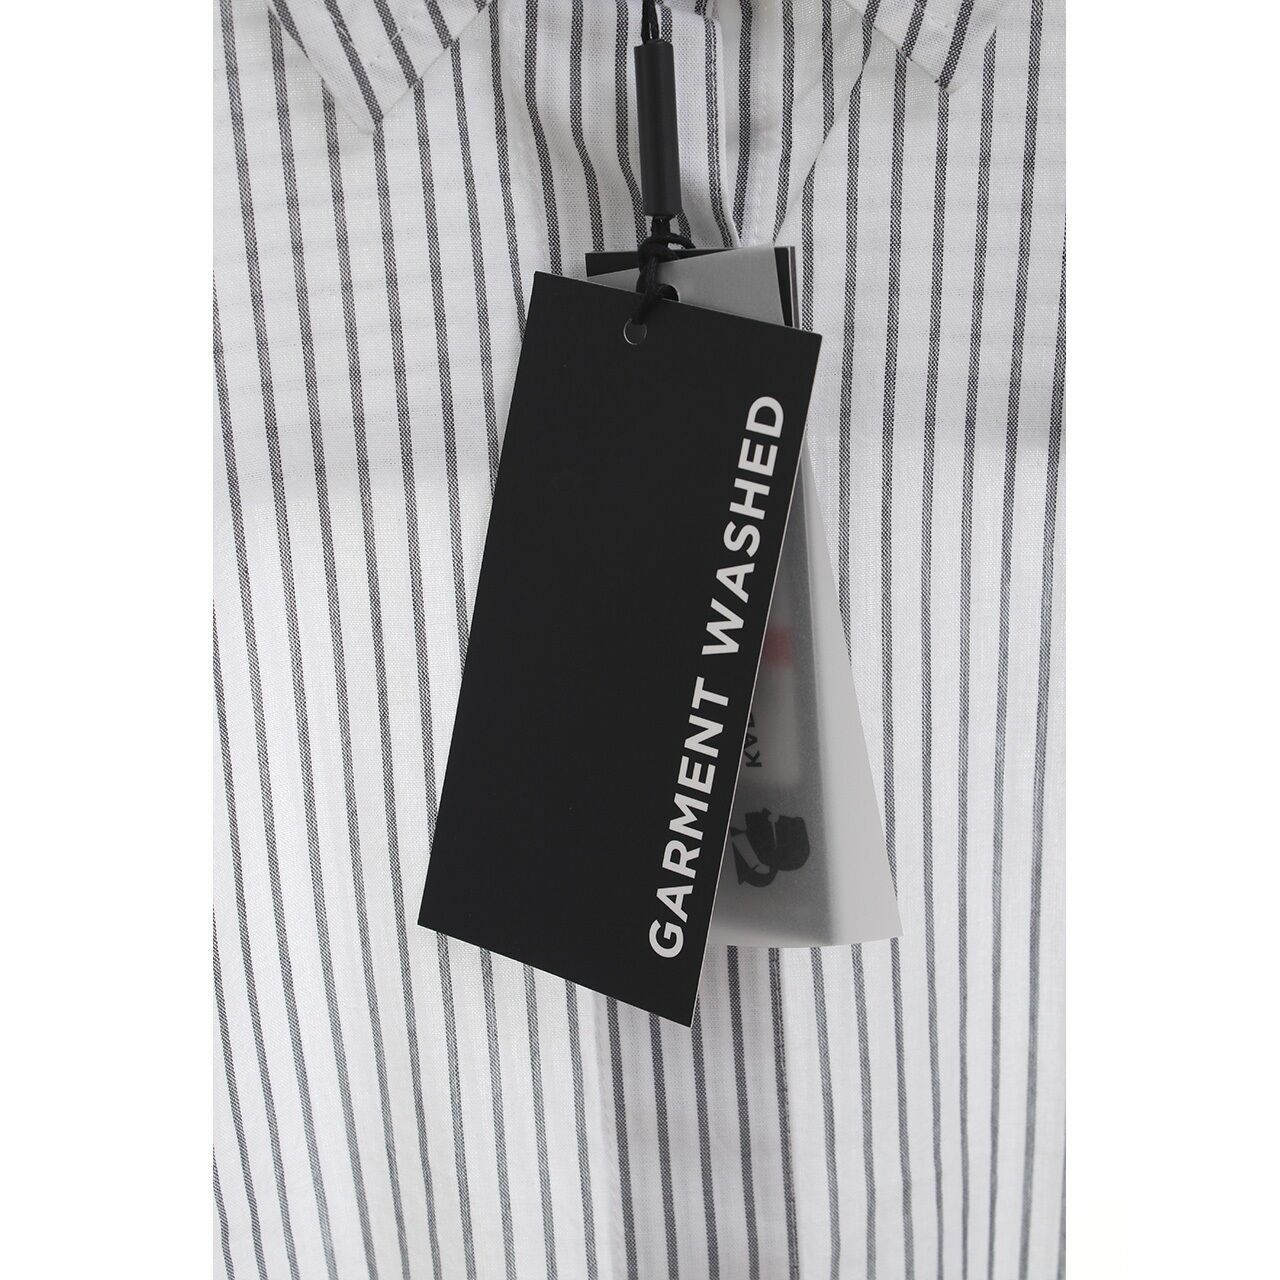 Karl Lagerfeld Group Casual Stripe White/Grey Shirt